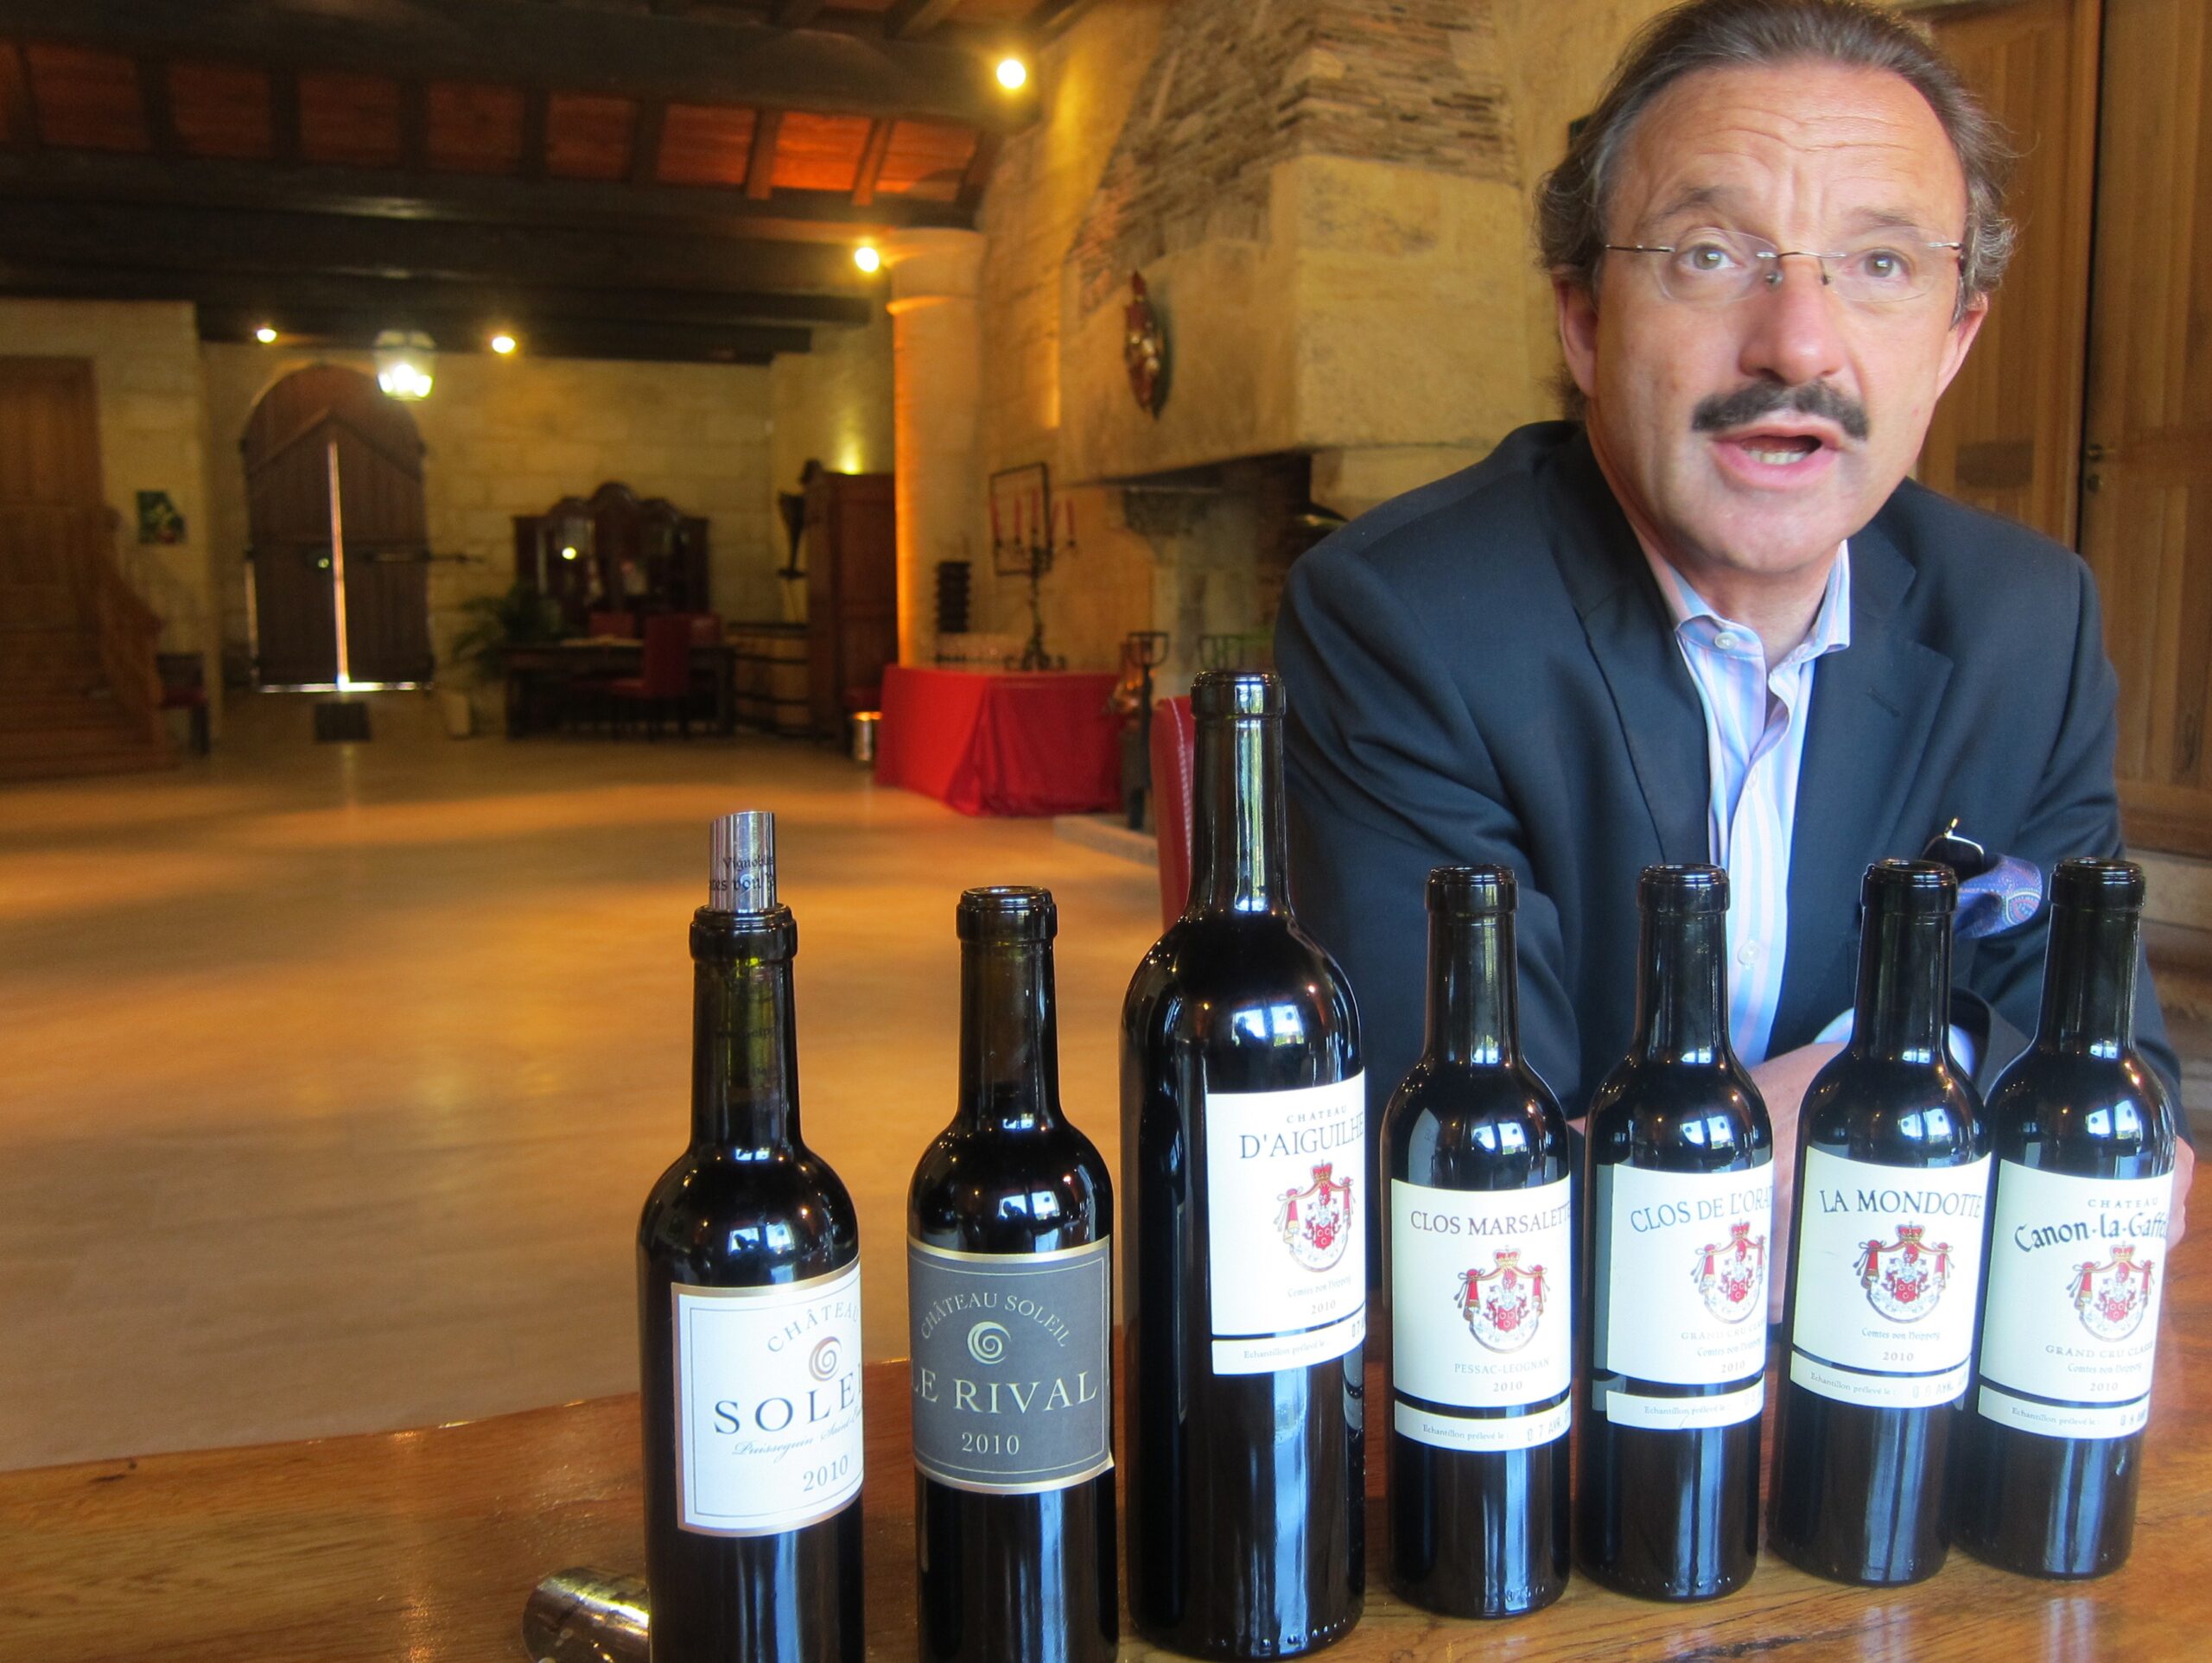 2010 Bordeaux Wine from Stephan von Niepperg “No risk, no fun”